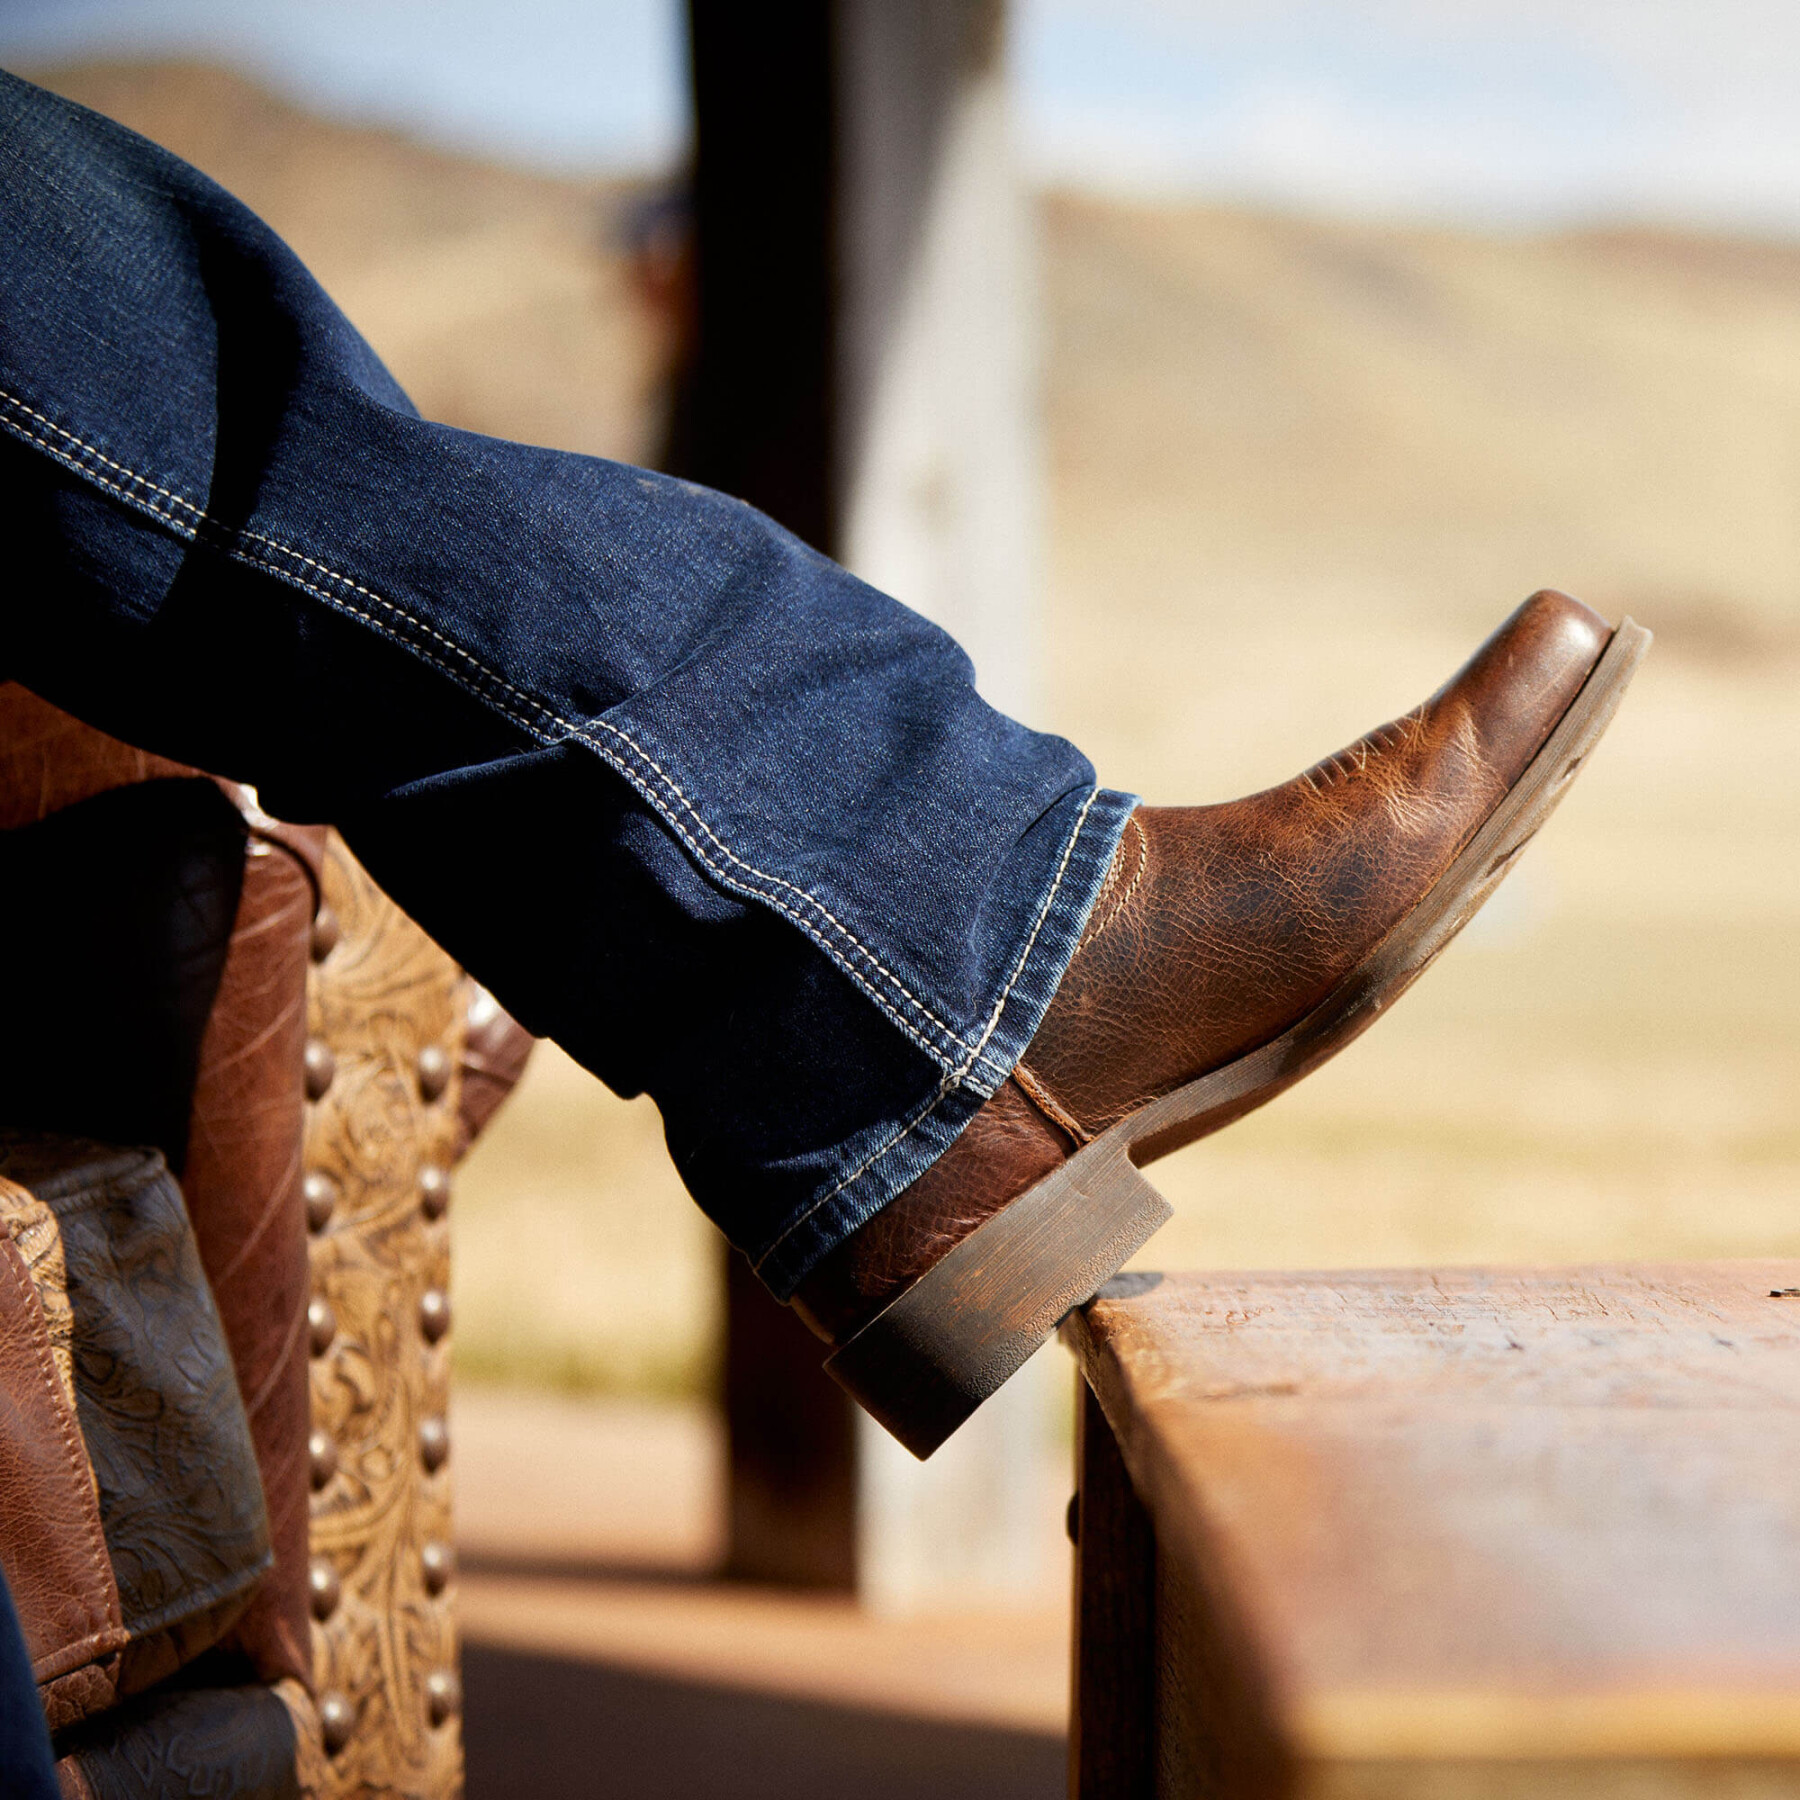 Leather western boots Ariat Rambler Wicker